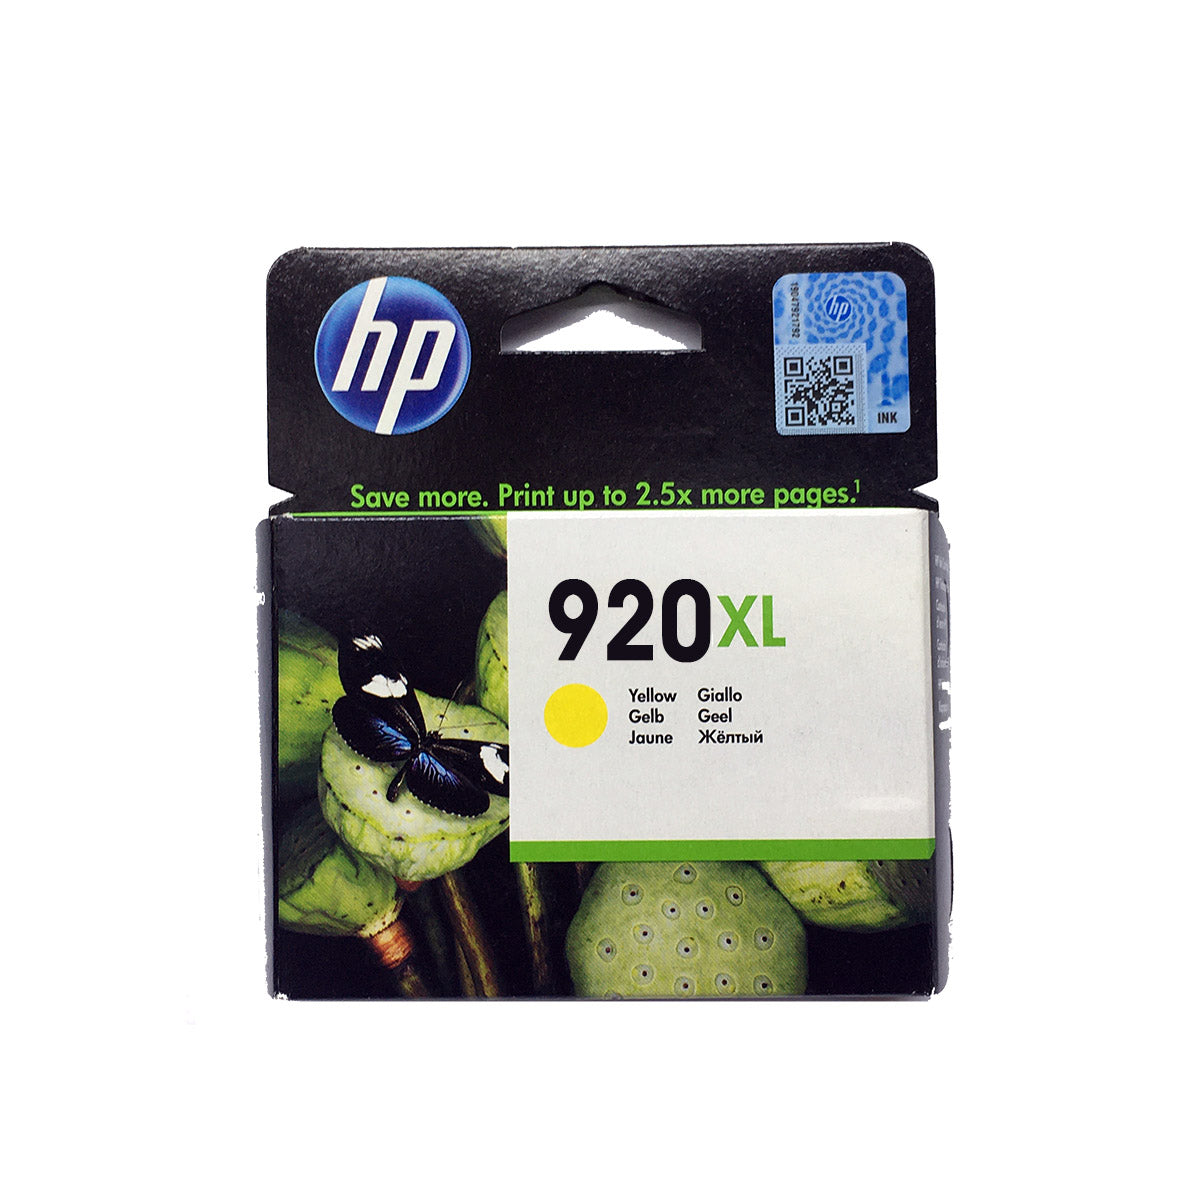 Shop HP 920XL Original Ink Cartridge Yellow Color online in Abu Dhabi, UAE